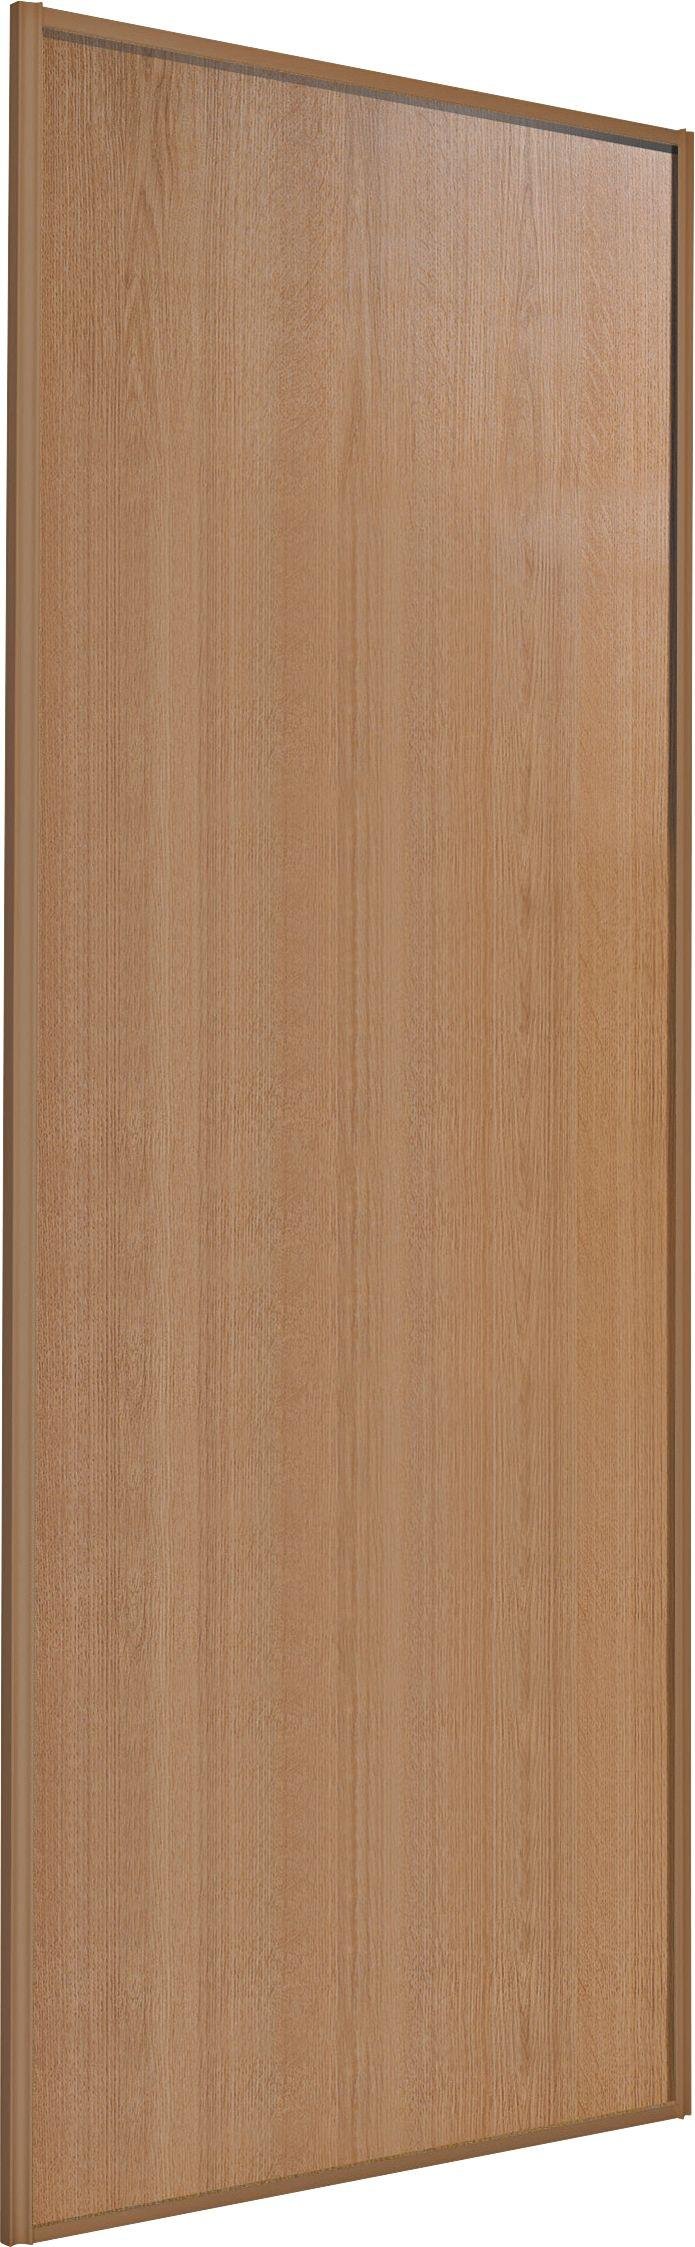 Sliding Wardrobe Door W914mm Oak Panel